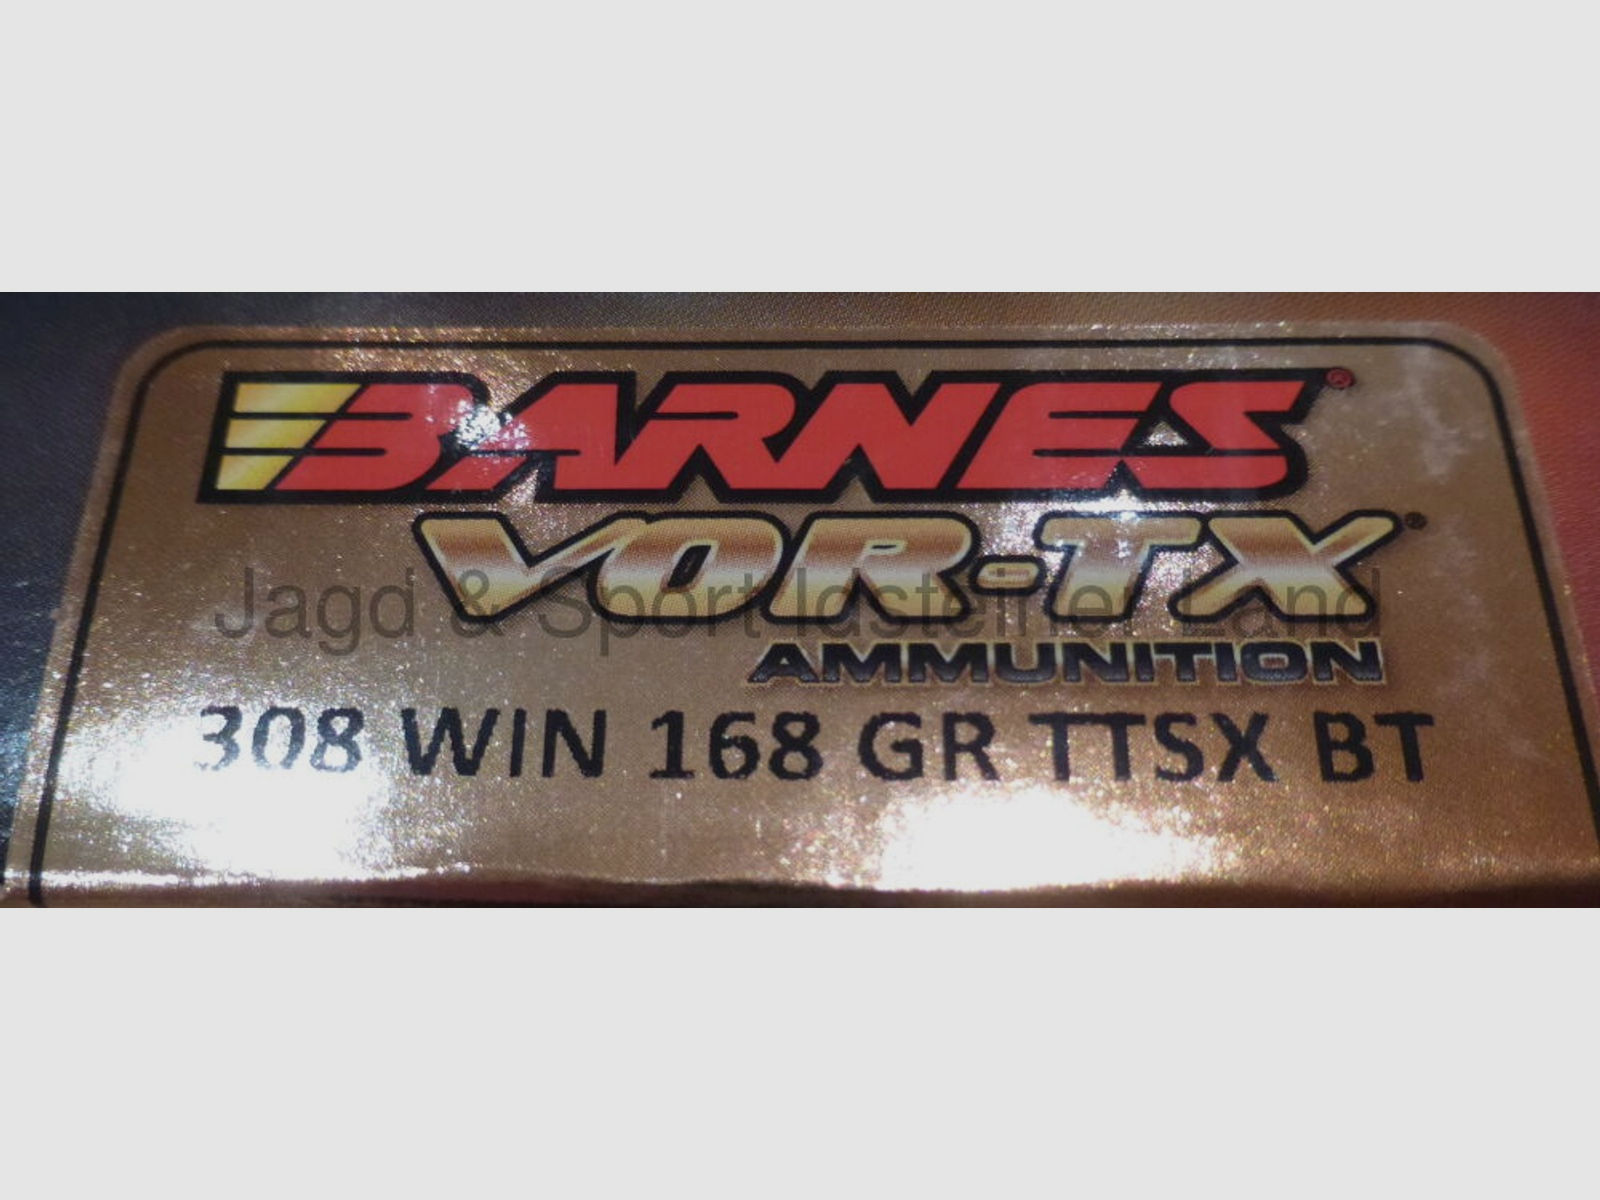 Barnes	 VOR-TX euro TTSX 168grs (bleifrei)